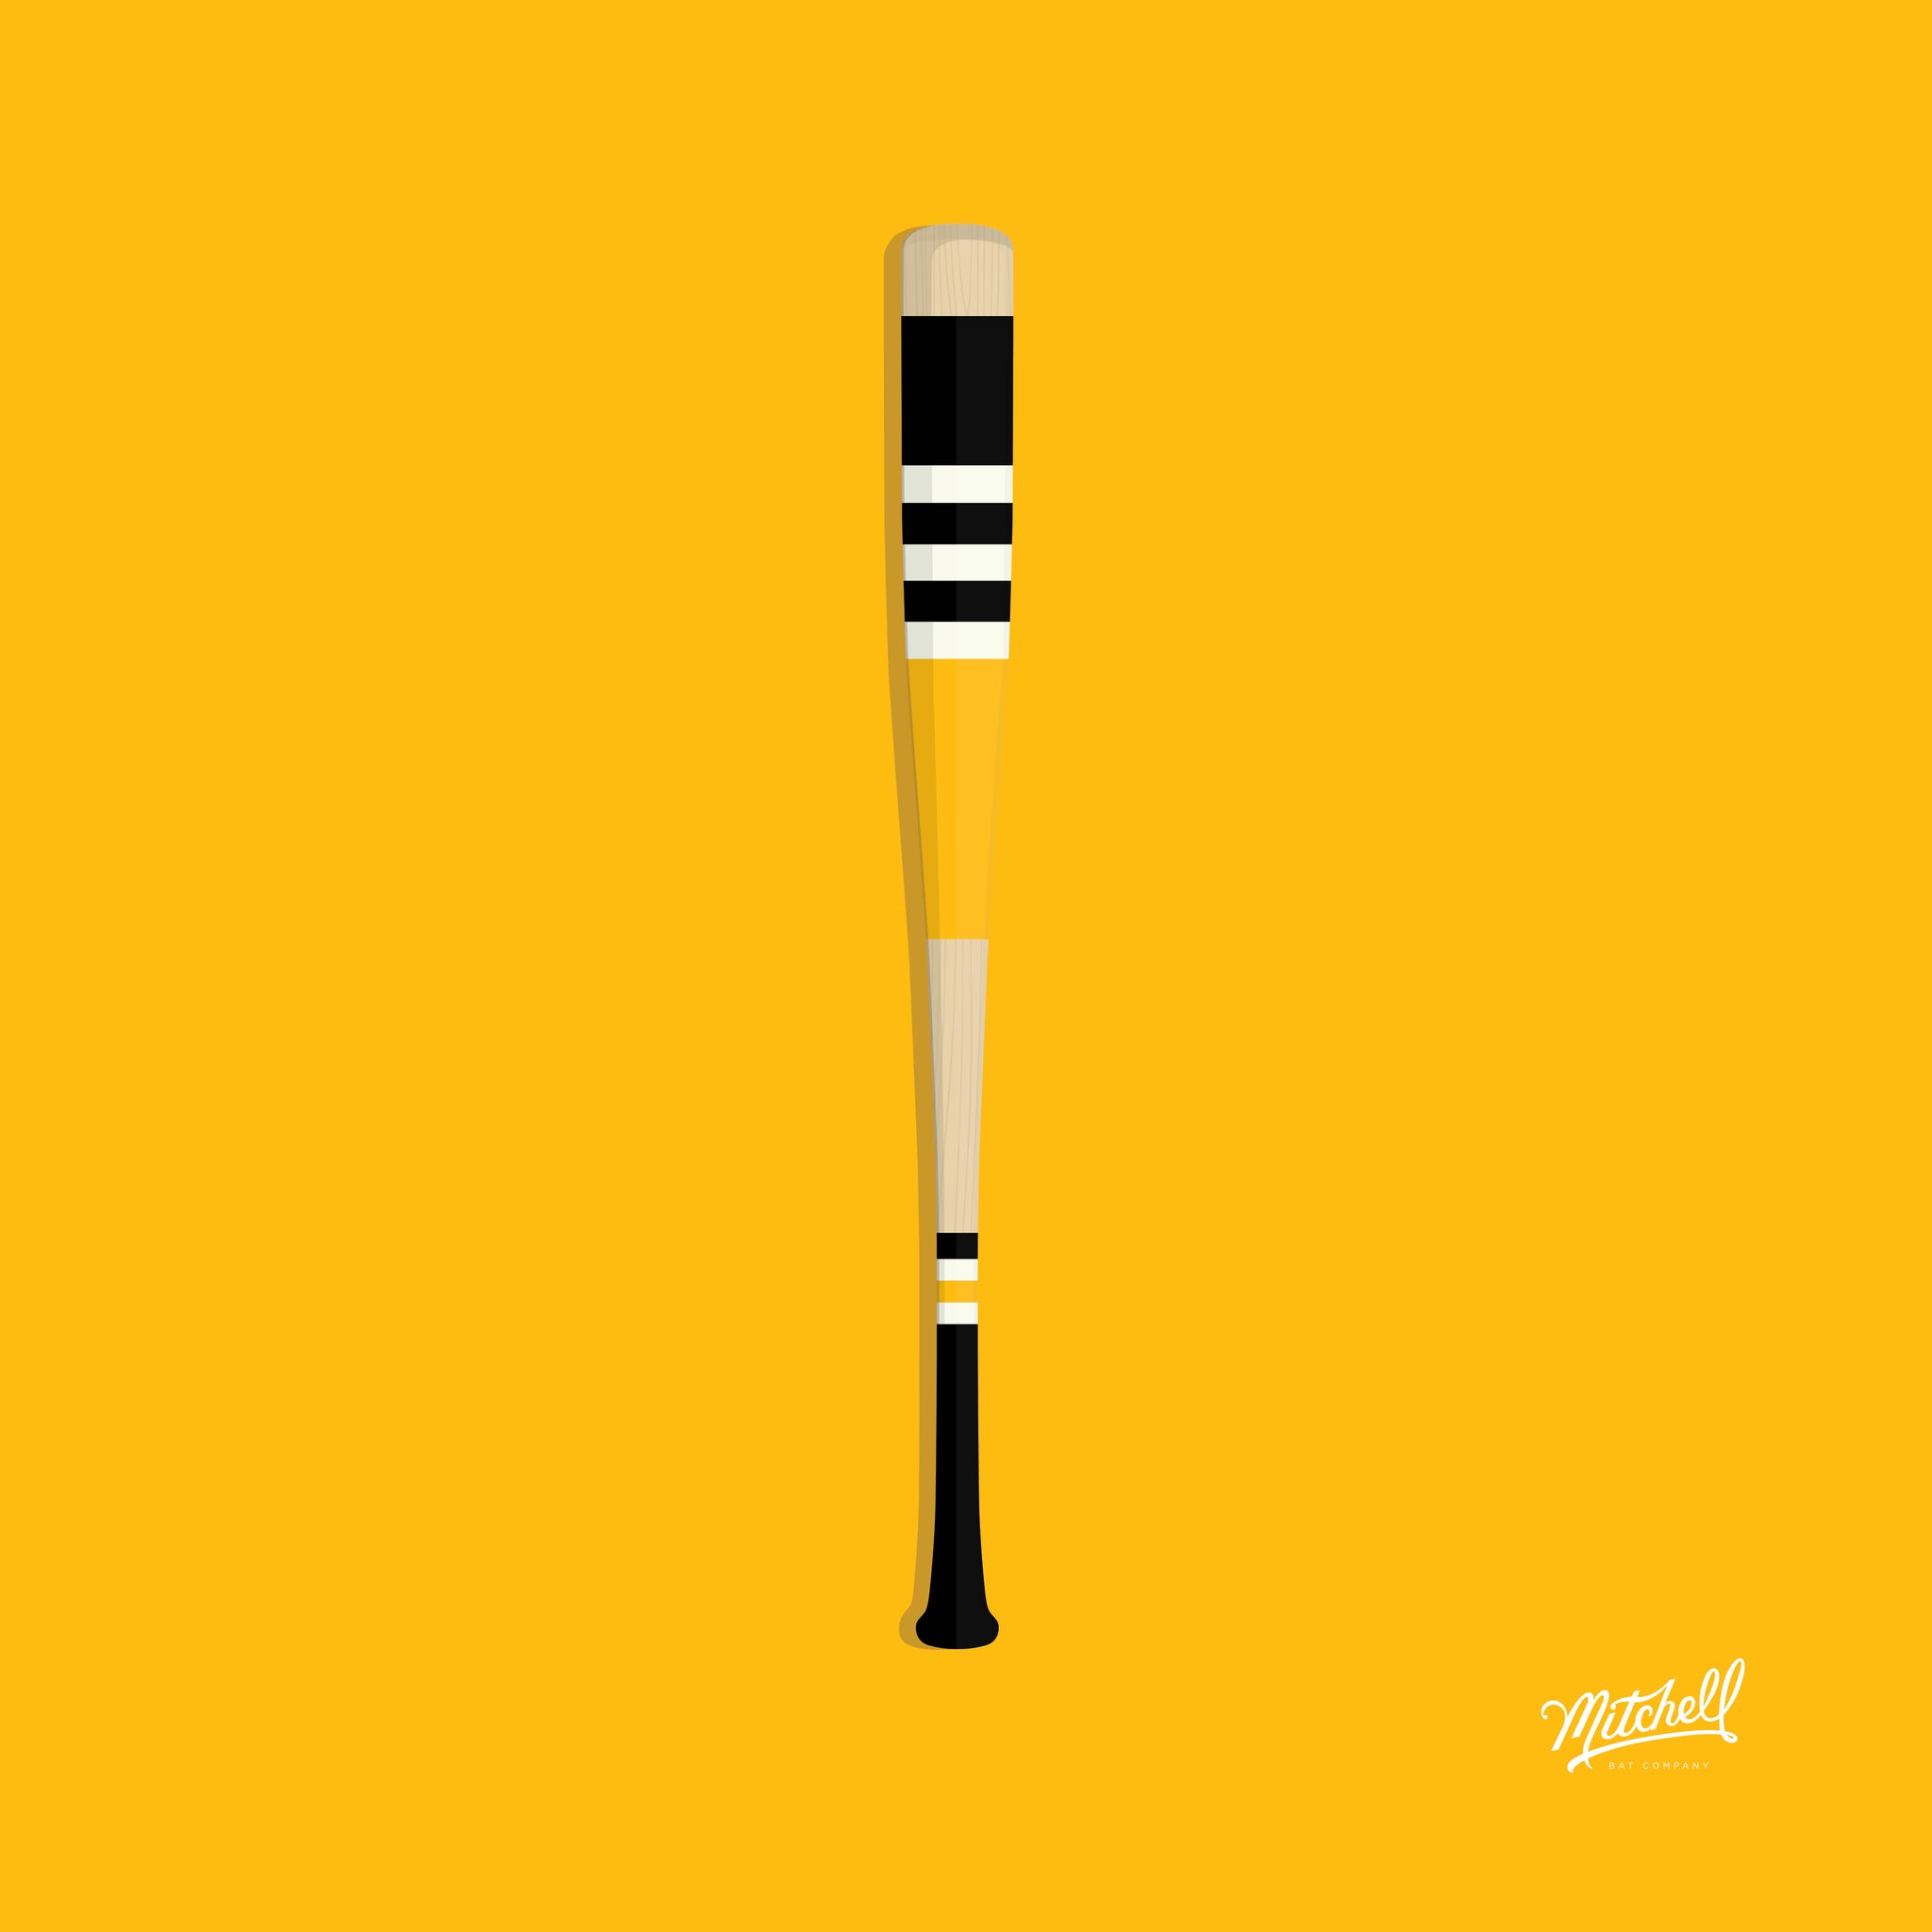 Mitchell Bat Illustration Poster (yellow/black)